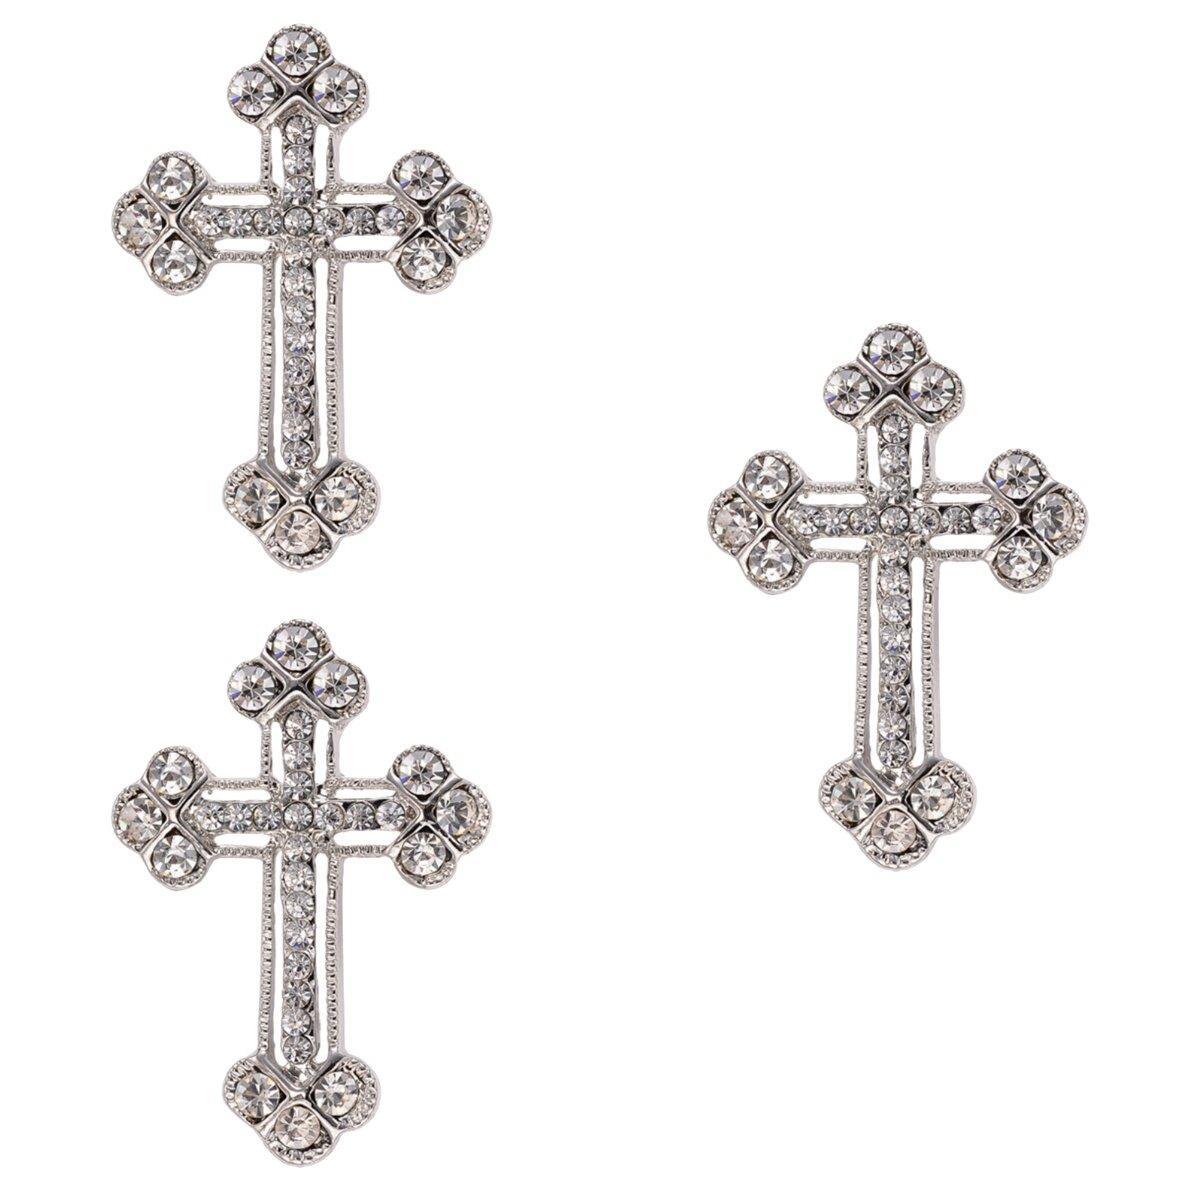 3 Count Rhinestone Jewelry Cross Lapel Pin Clothing Diamond Brooch Men's